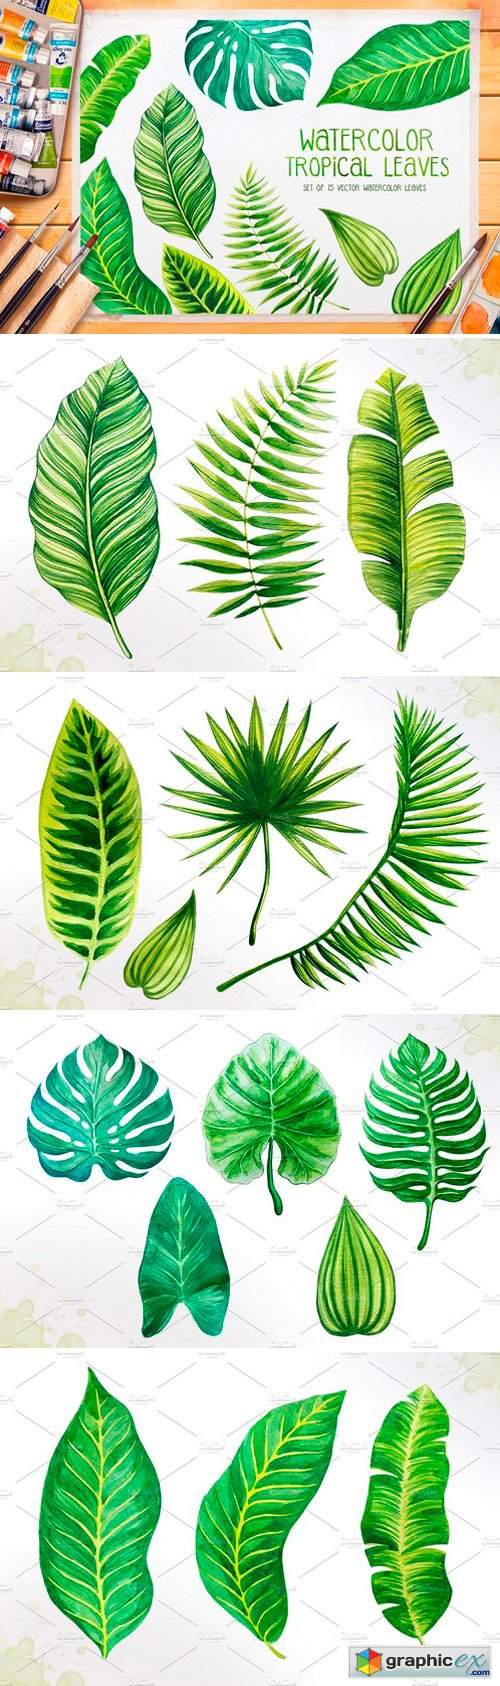 Tropical leaves. Watercolor vector